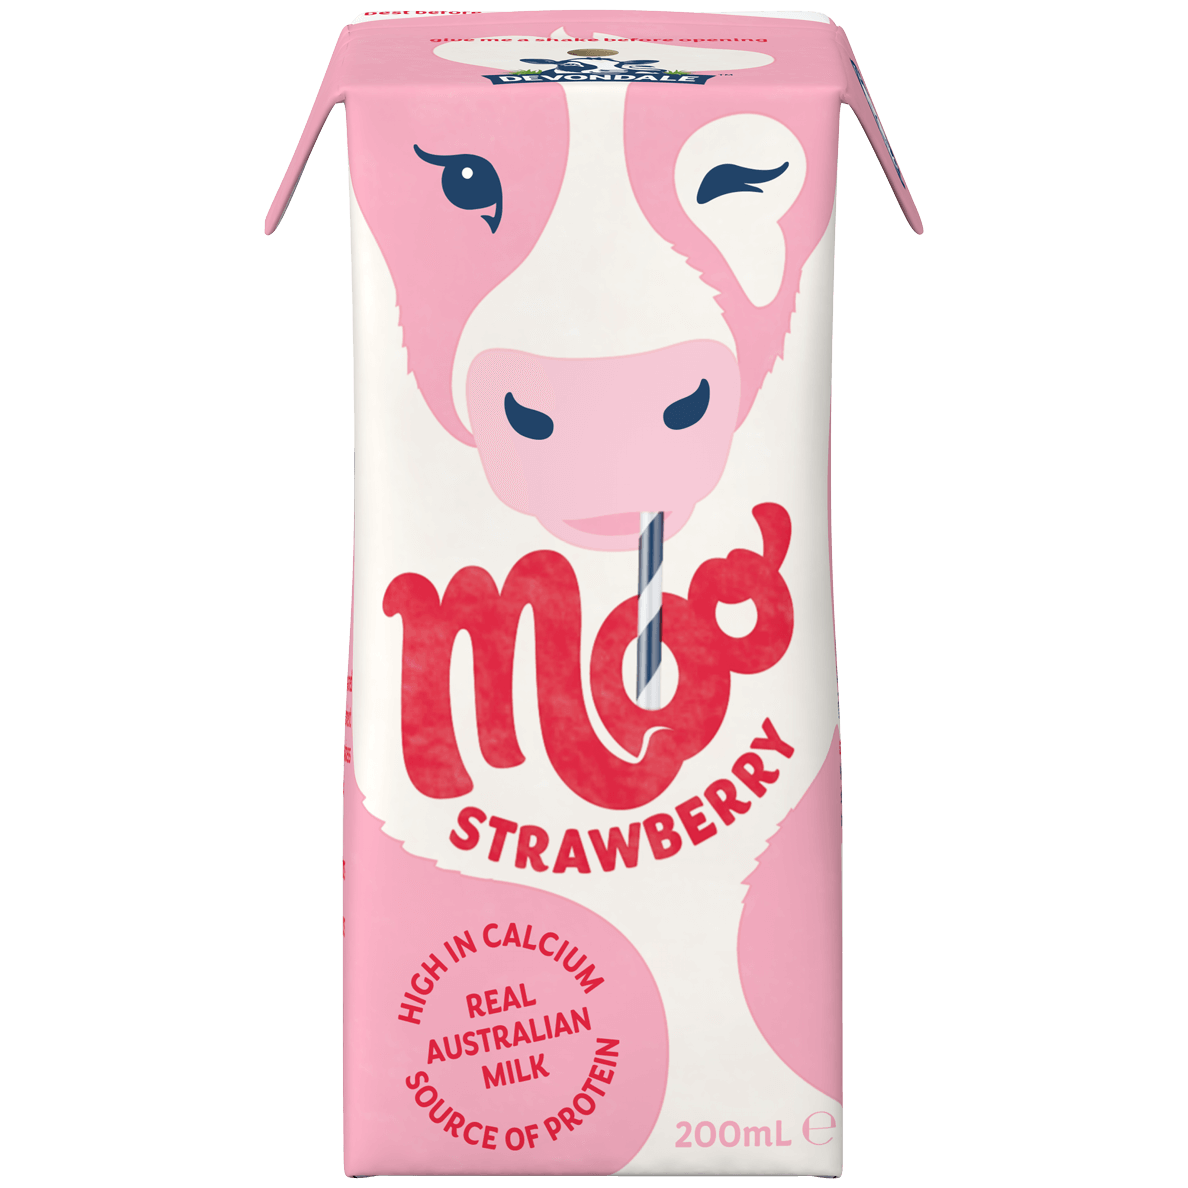 <span class="headline-span">Moo Strawberry</span>Long Life Milk